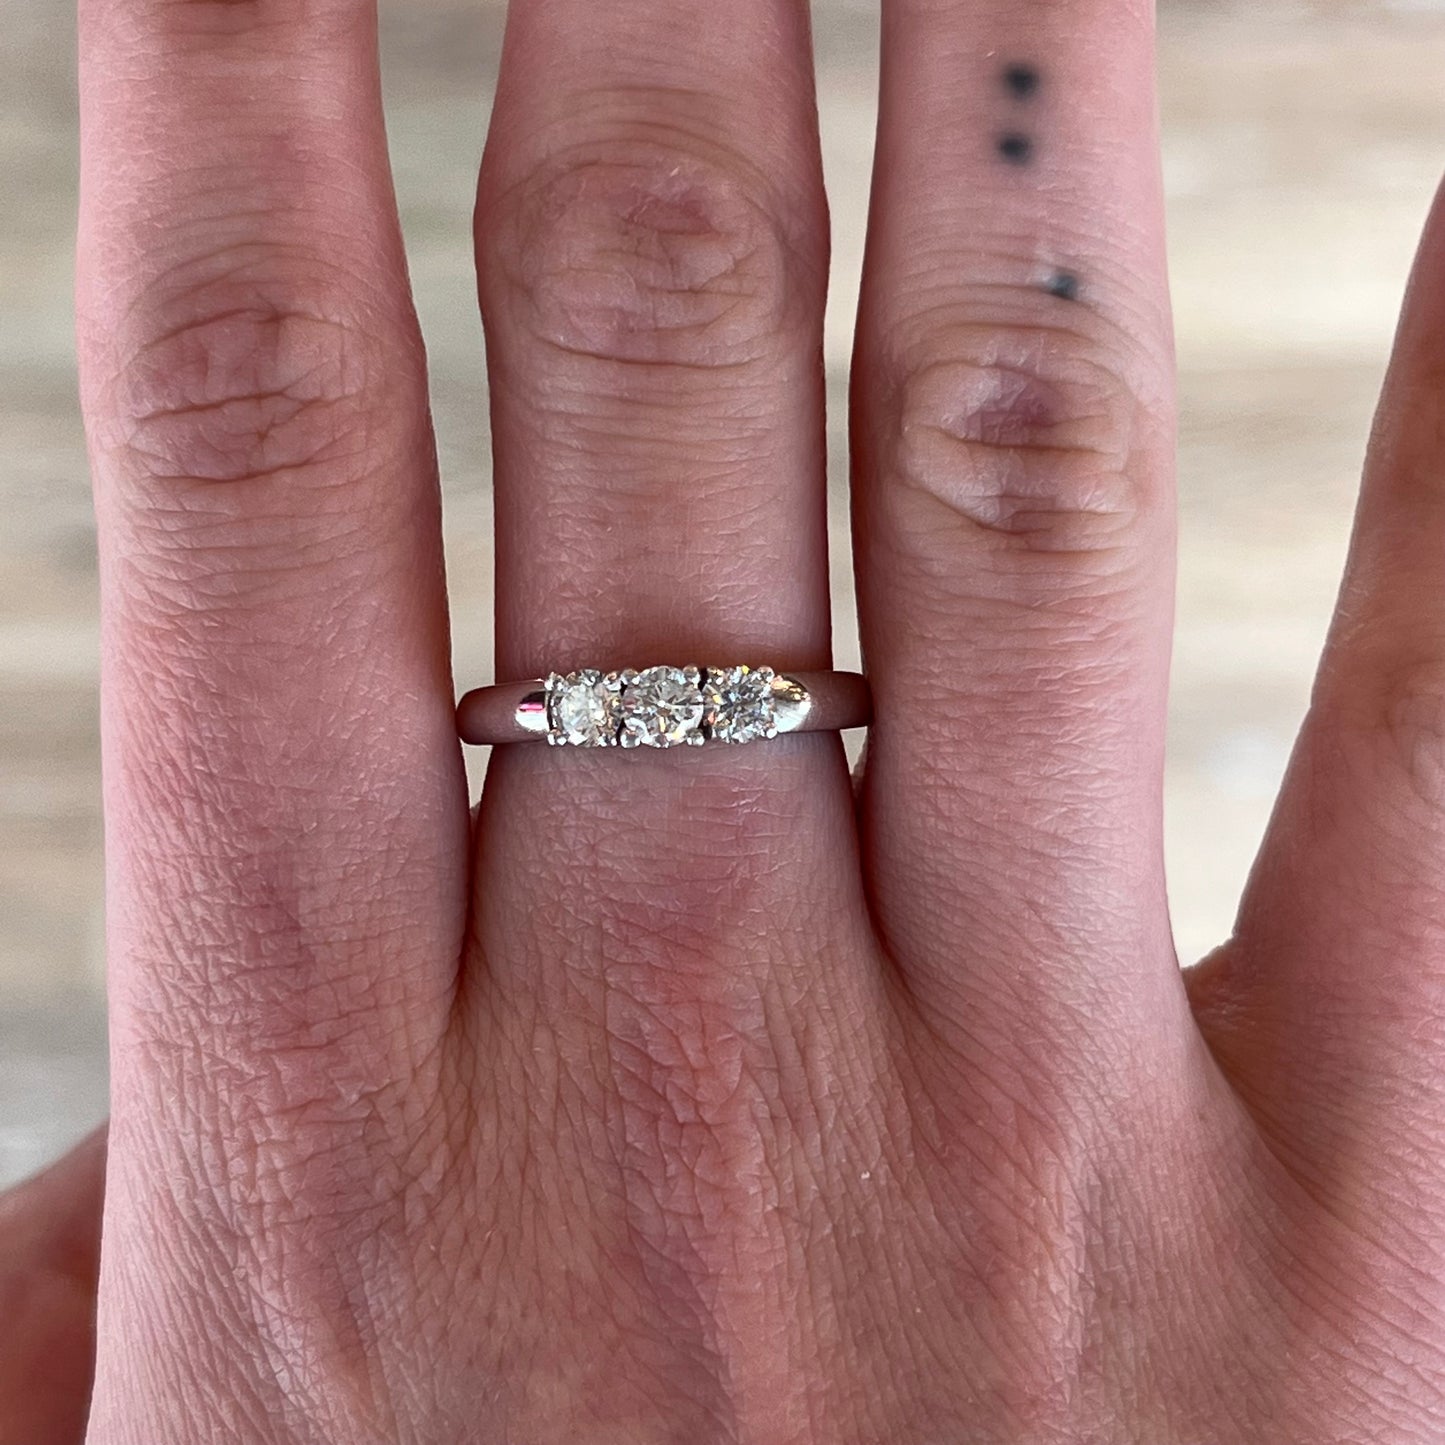 .51 Three Stone Diamond Engagement Ring in 14k White Gold